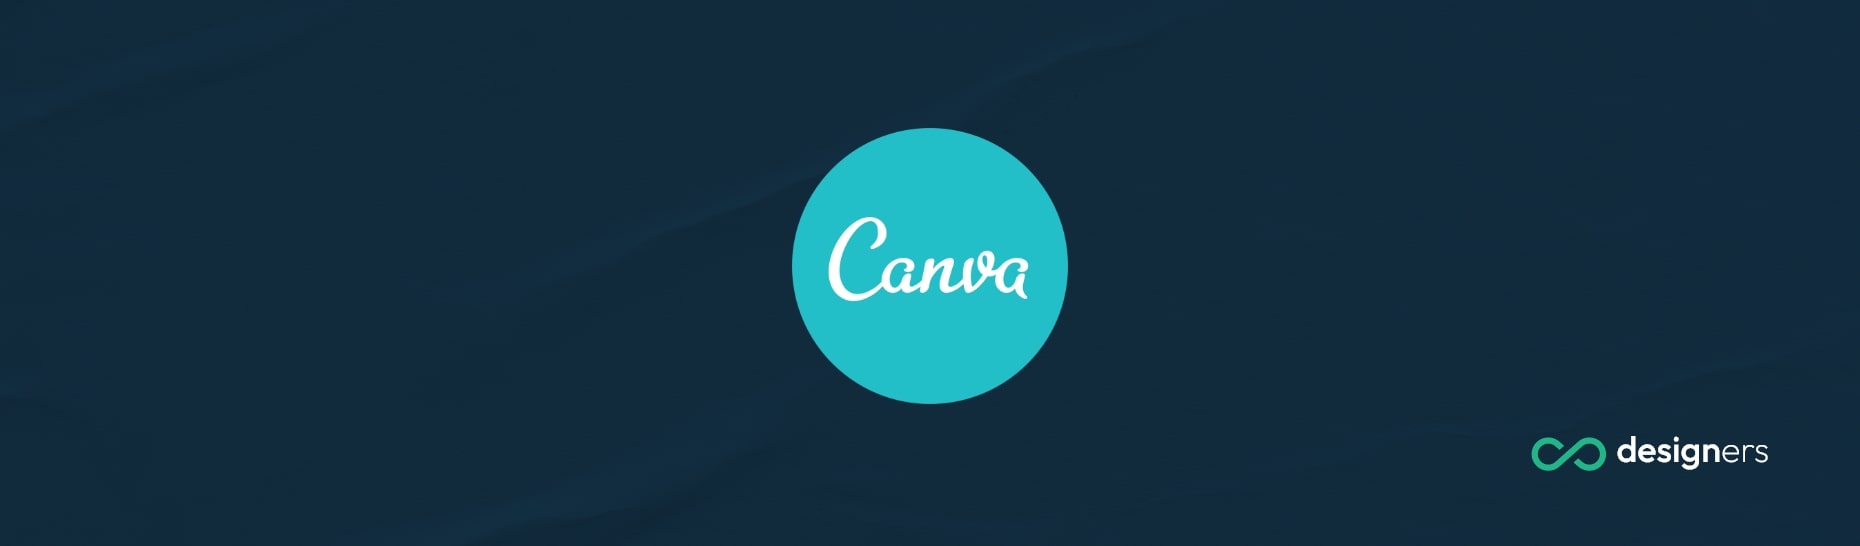 Is Canva Font Free?